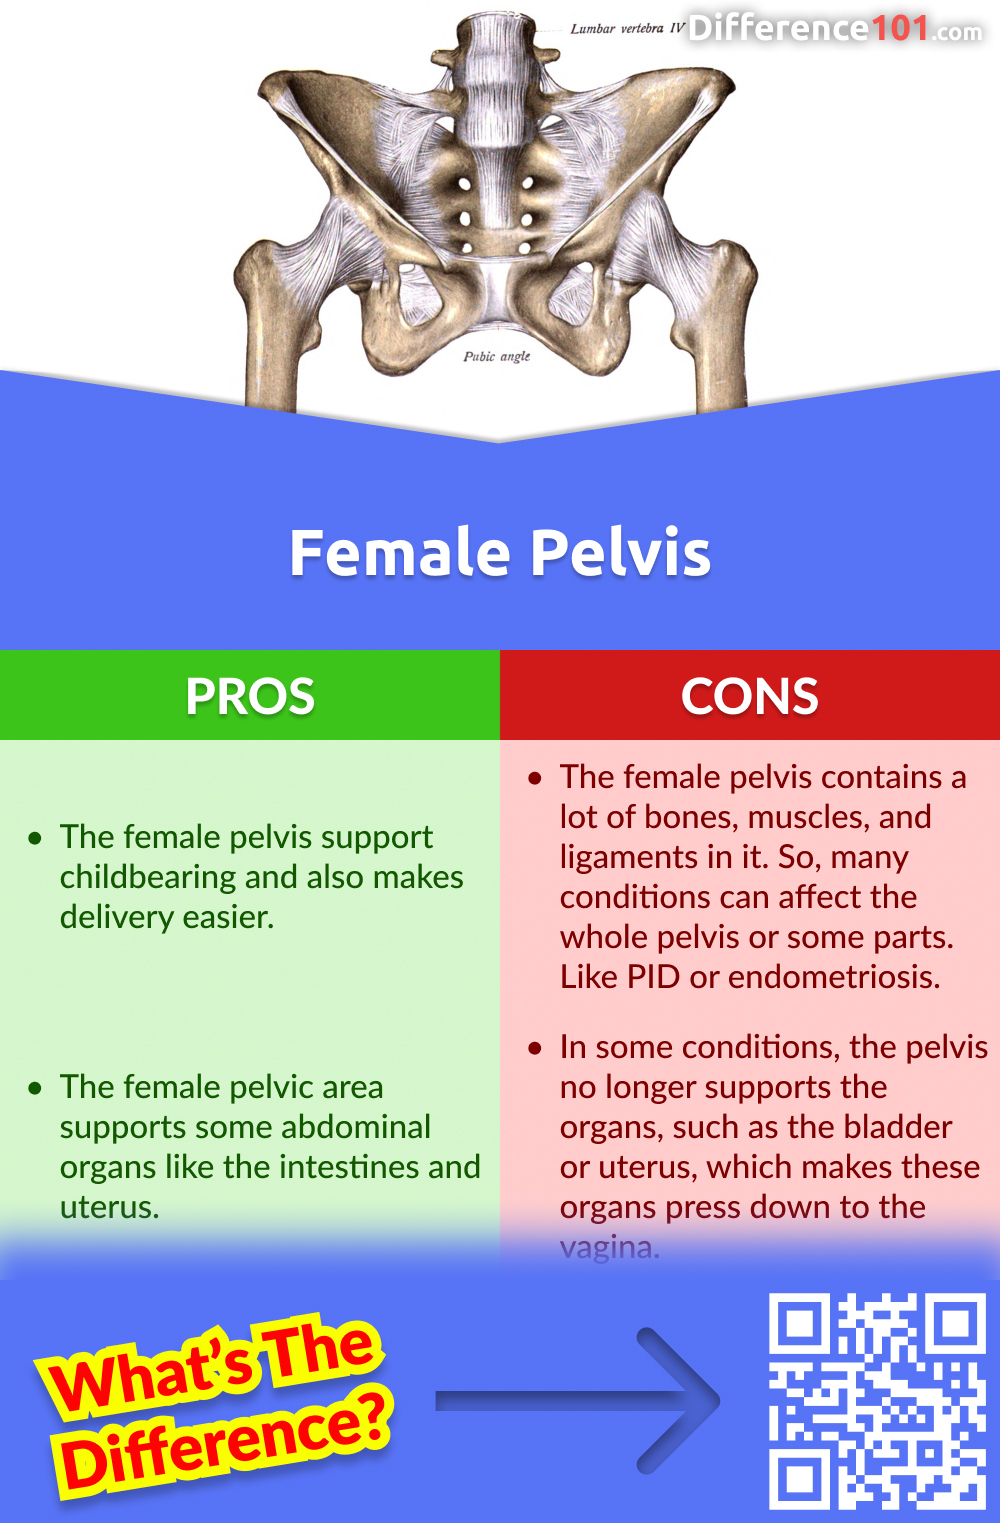 Female Pelvis Pros and Cons